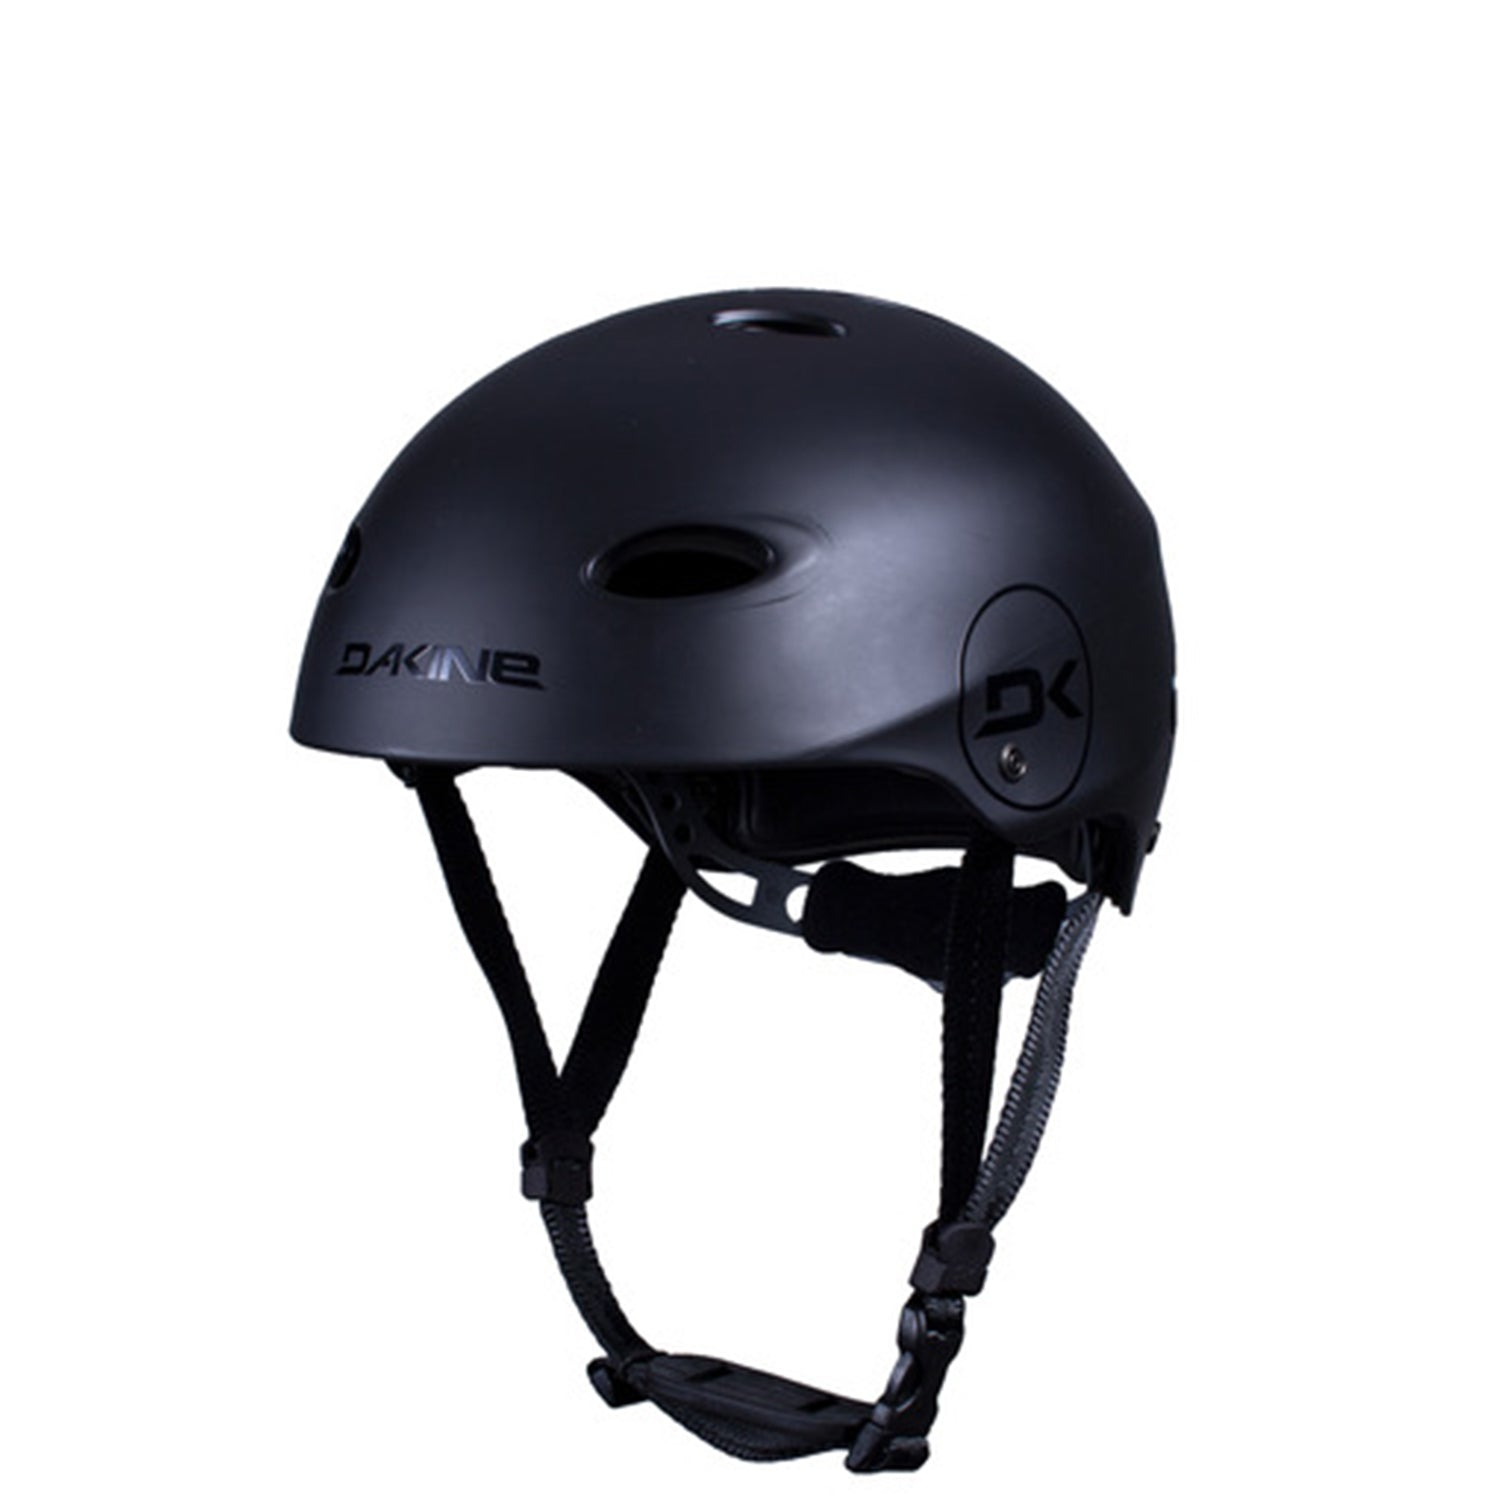 Dakine | Renegade Helmet - Black